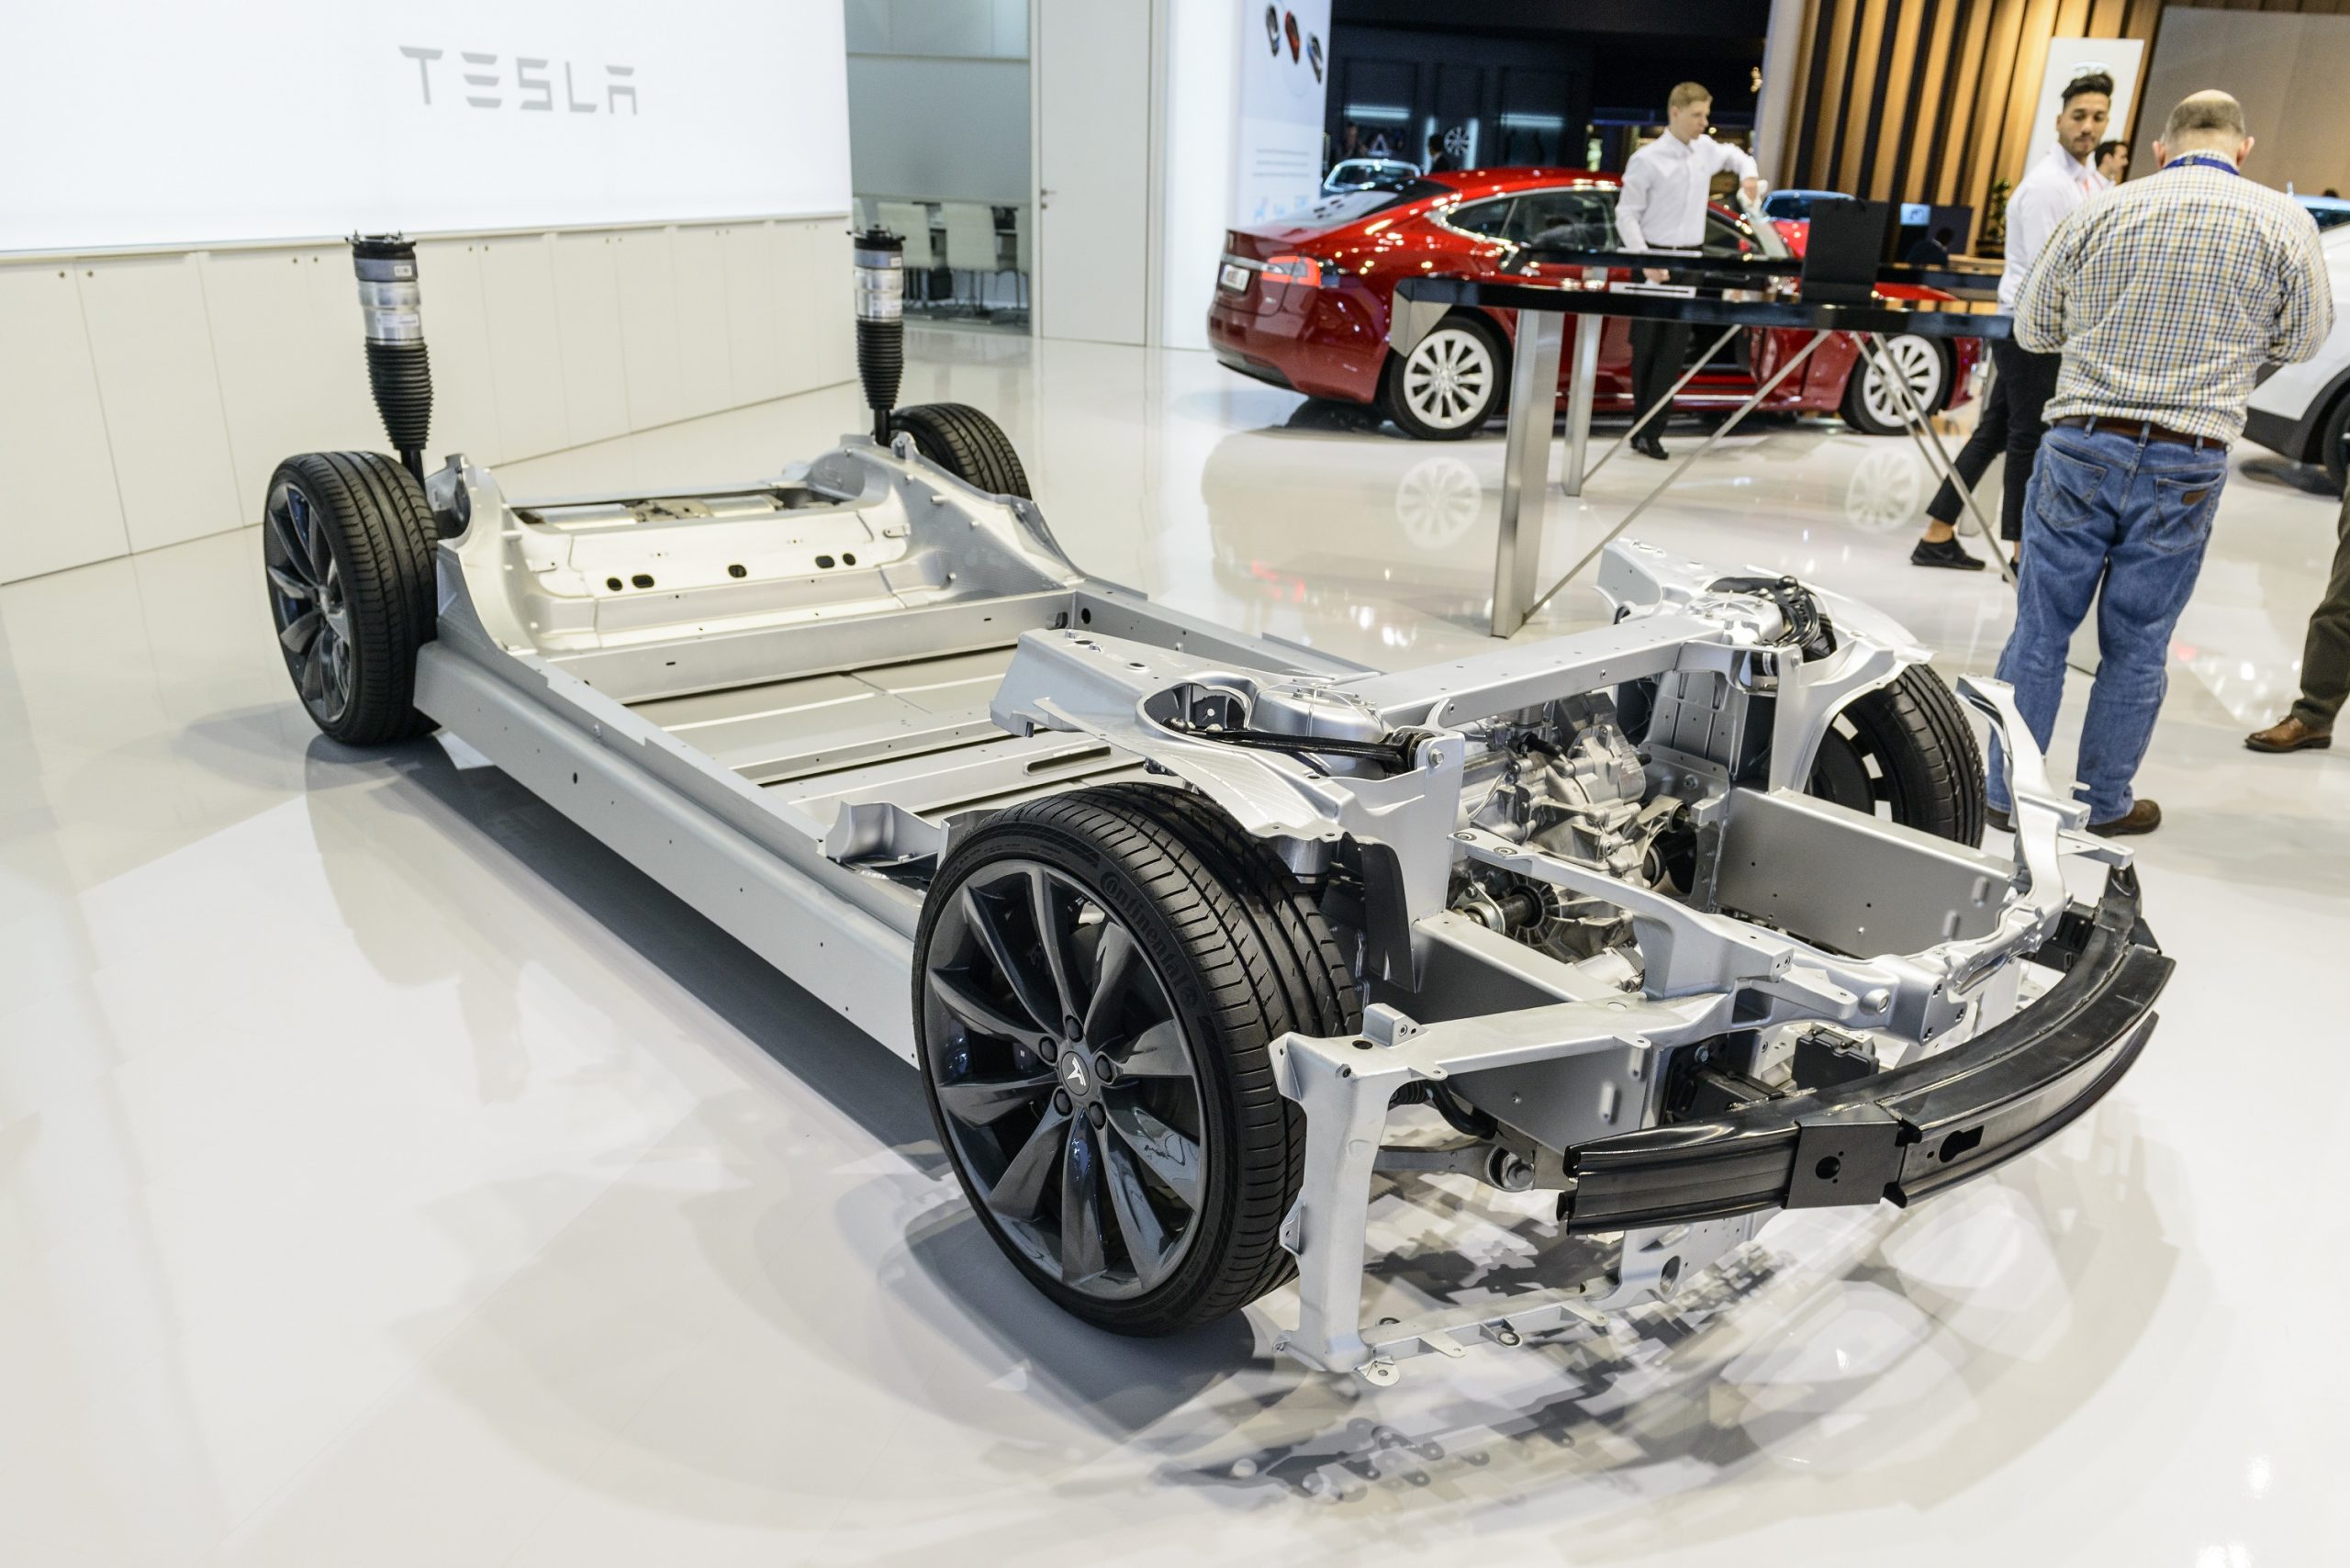 The battery tray of a Tesla Model S EV